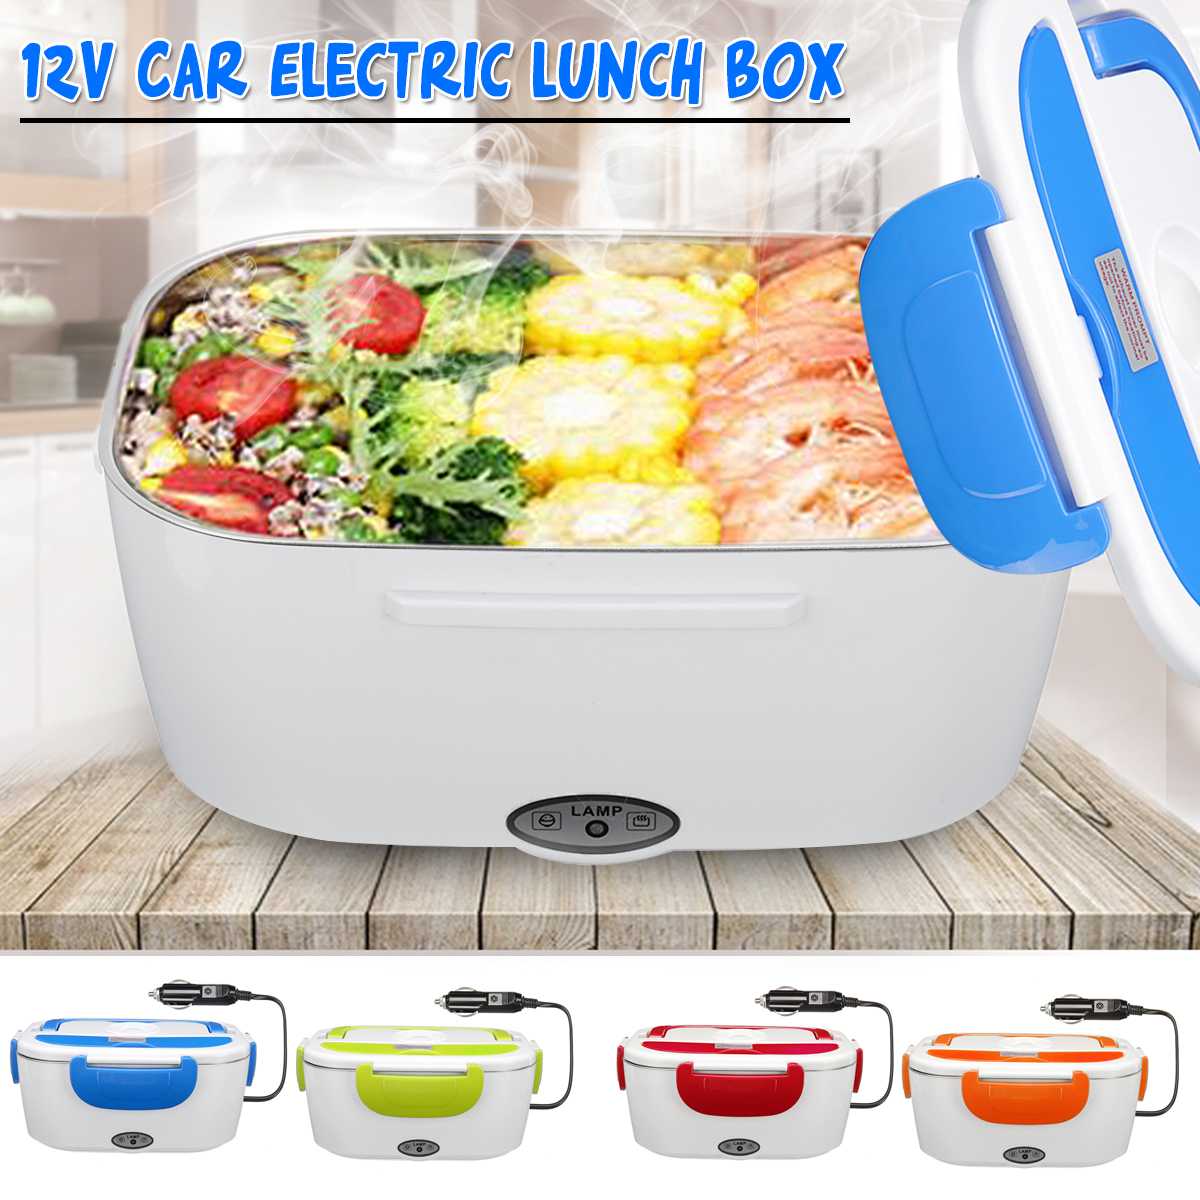 US 12V 40W Portable Auto Car Electric Heating Lunch Box Bento Food Warmer Heated